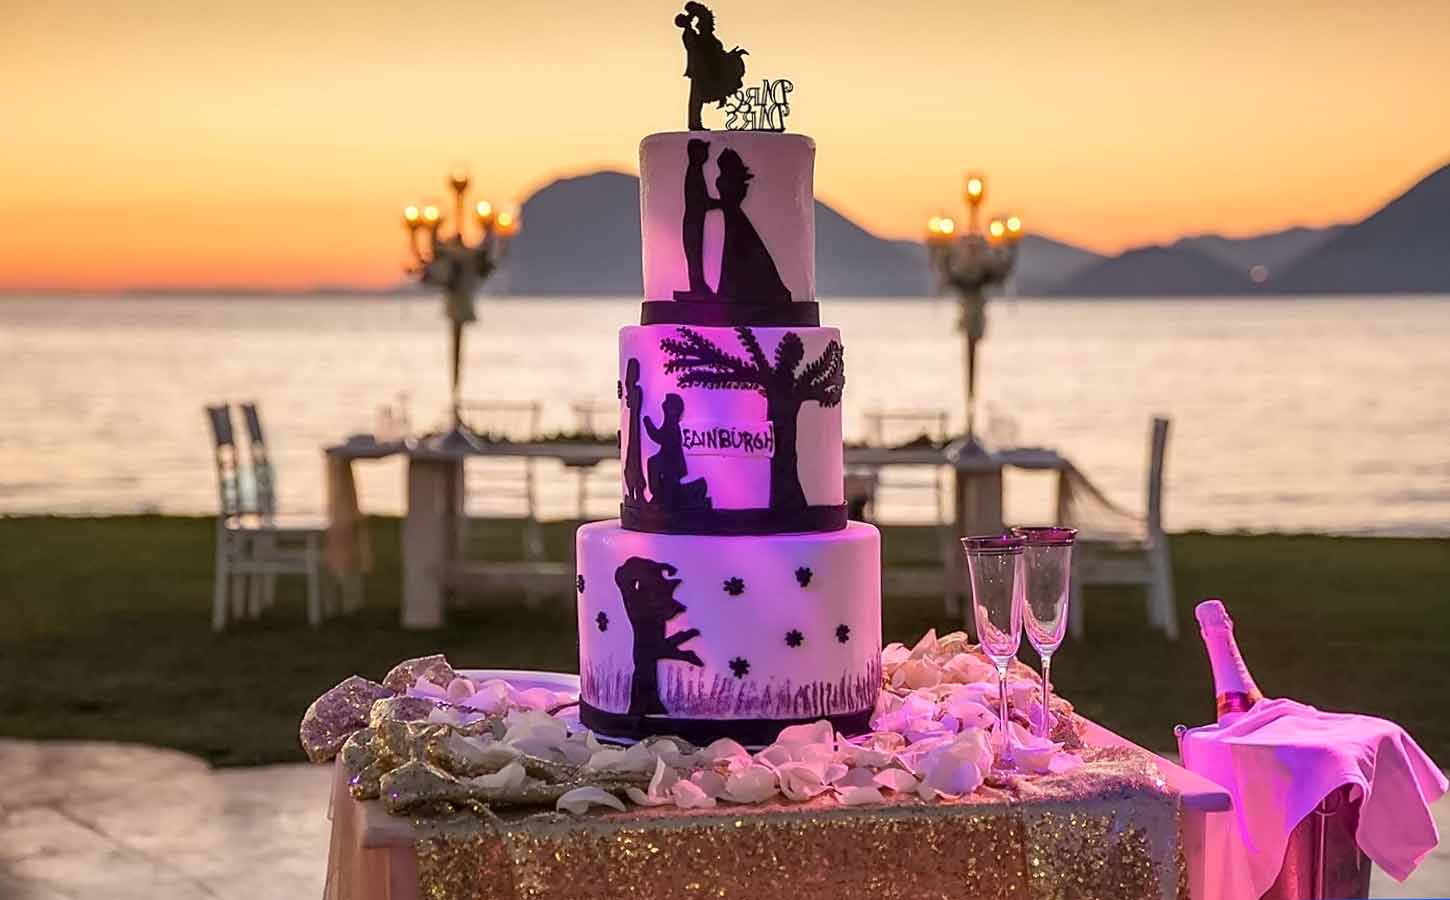 Amazing-cake-in-magenda-lighting-and-breathtaking-view!